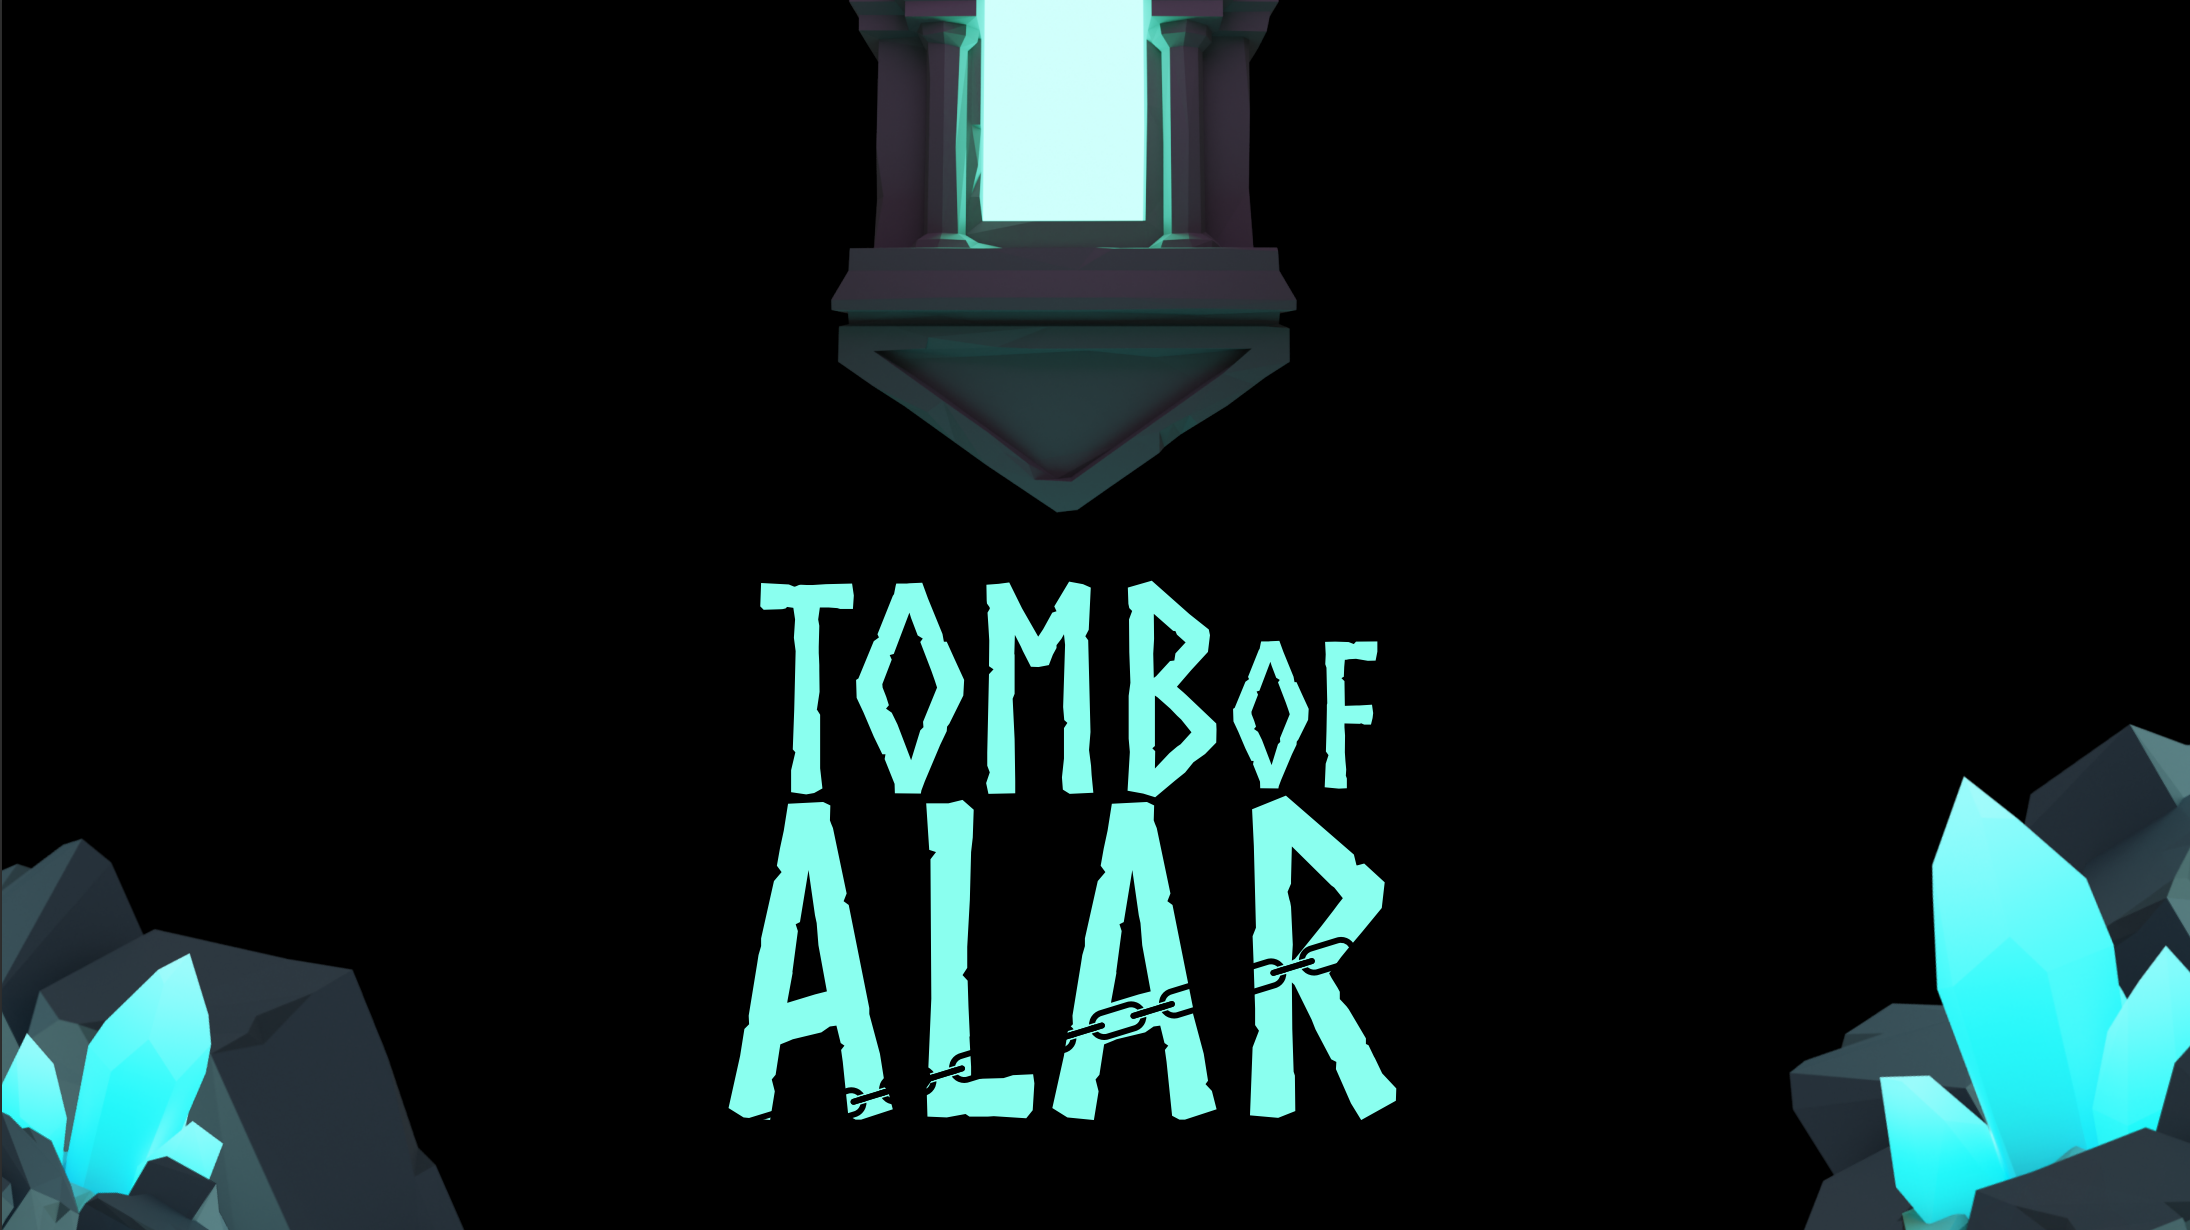 Tomb of Alar